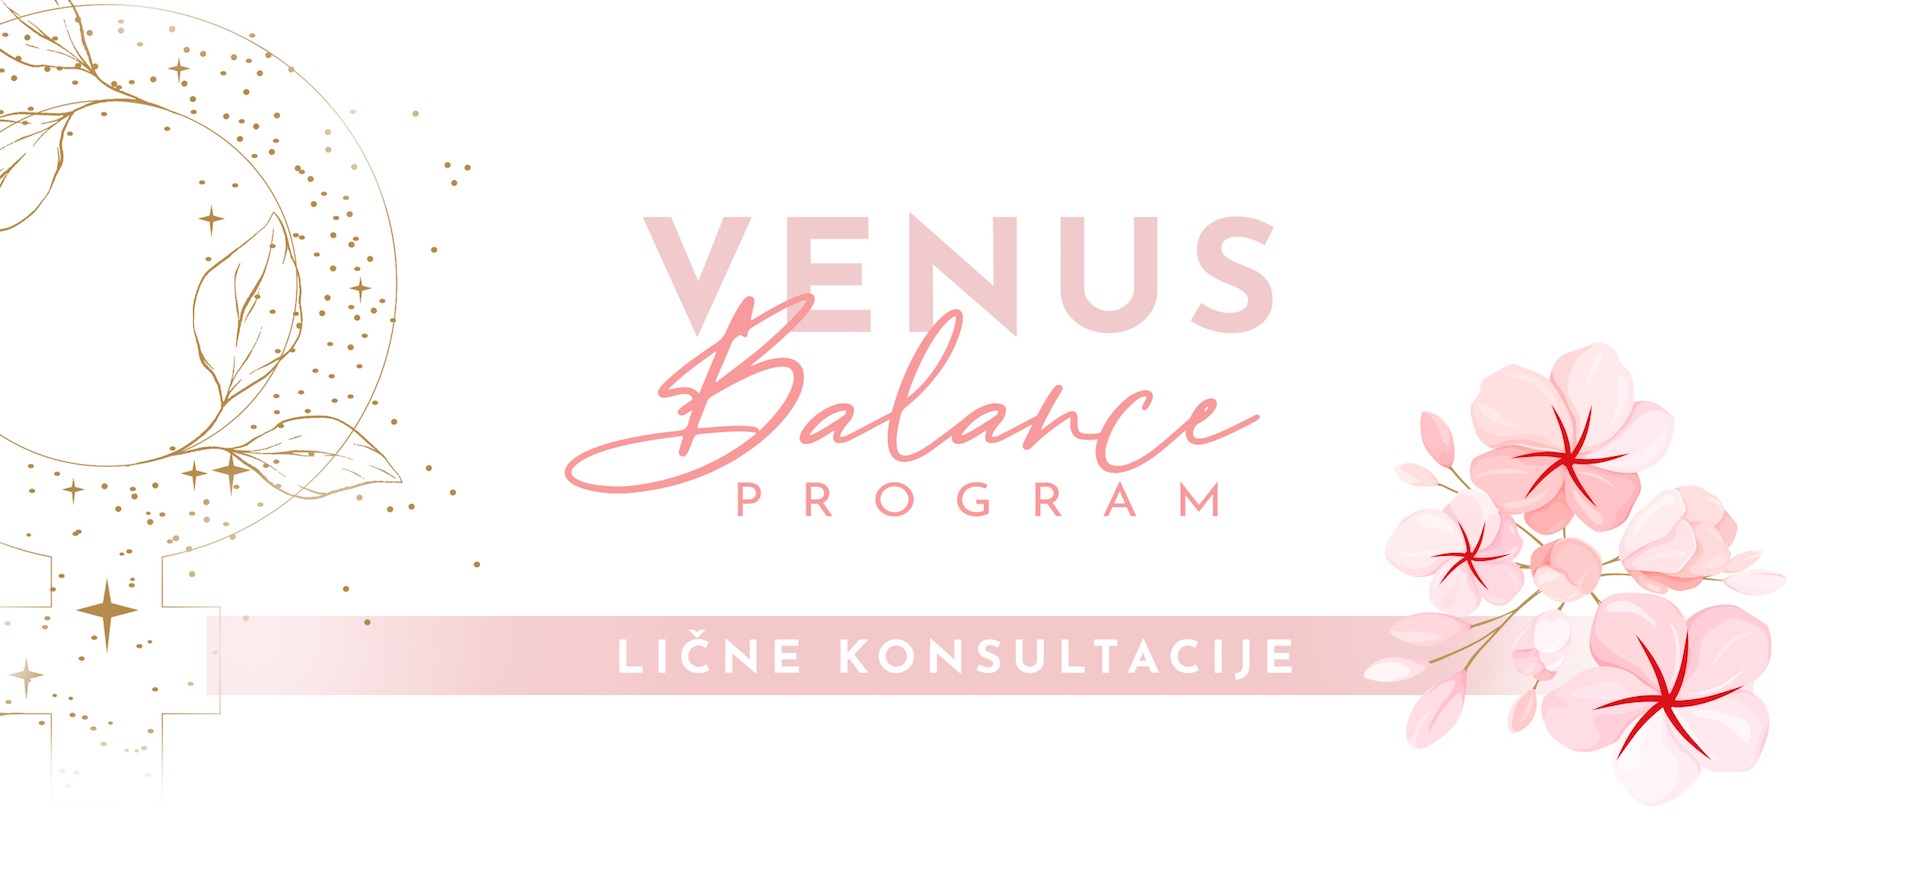 Venus Balance program